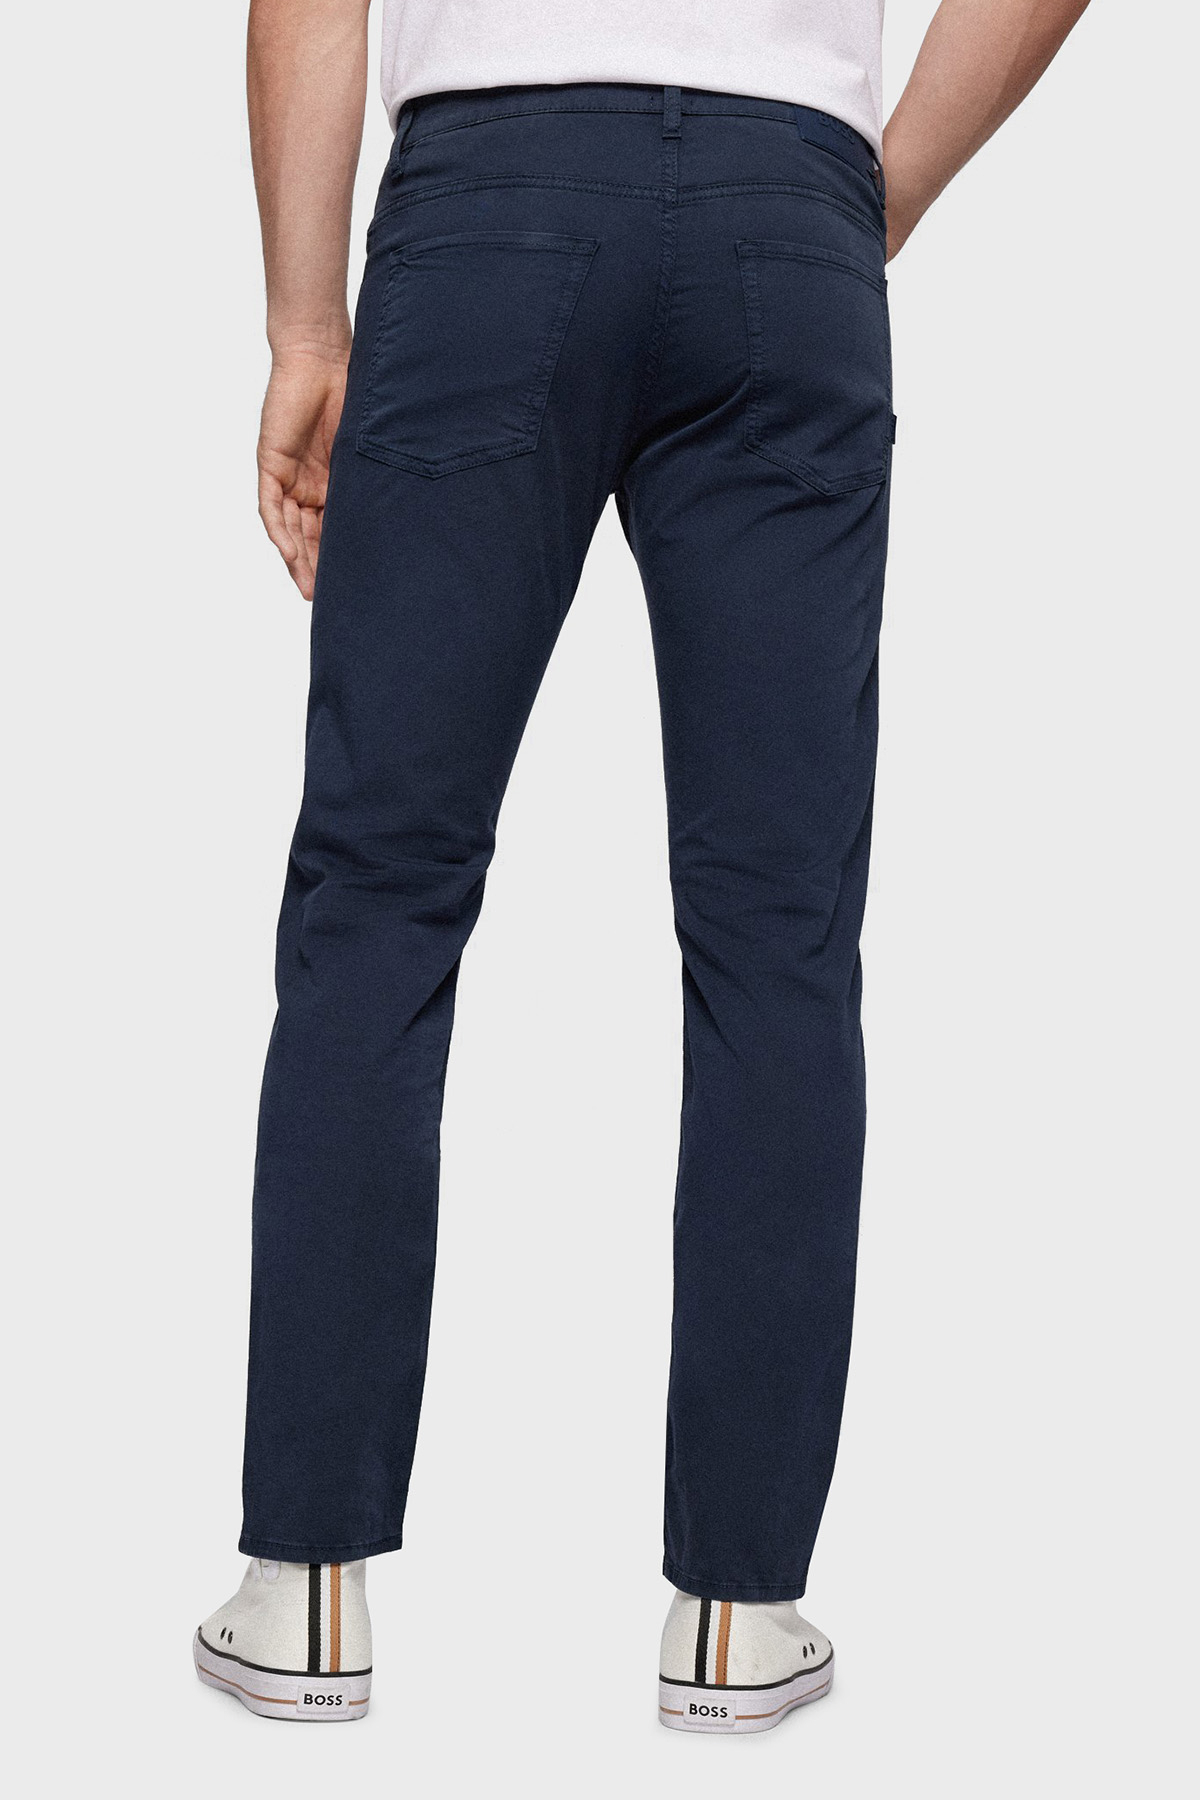 Boss Pamuklu Slim Fit Normal Bel Düz Paça Jeans Erkek Kot Pantolon 50449504 404 LACİVERT